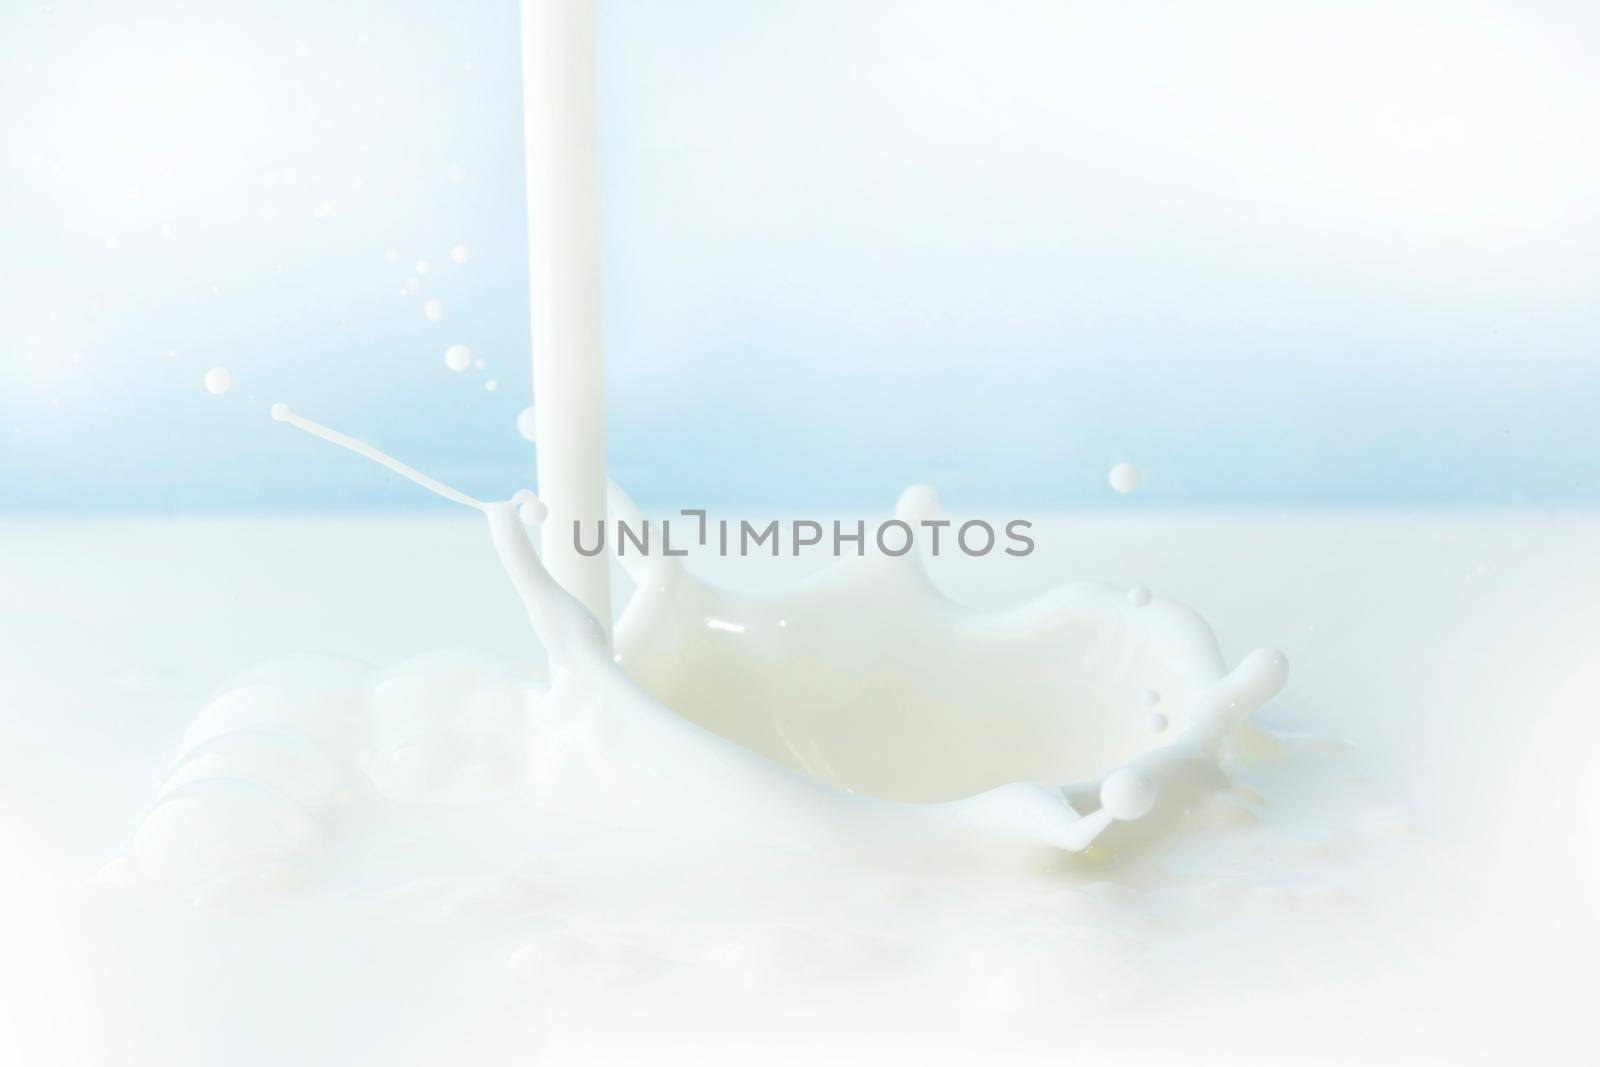 Pouring milk splash on blue background close-up